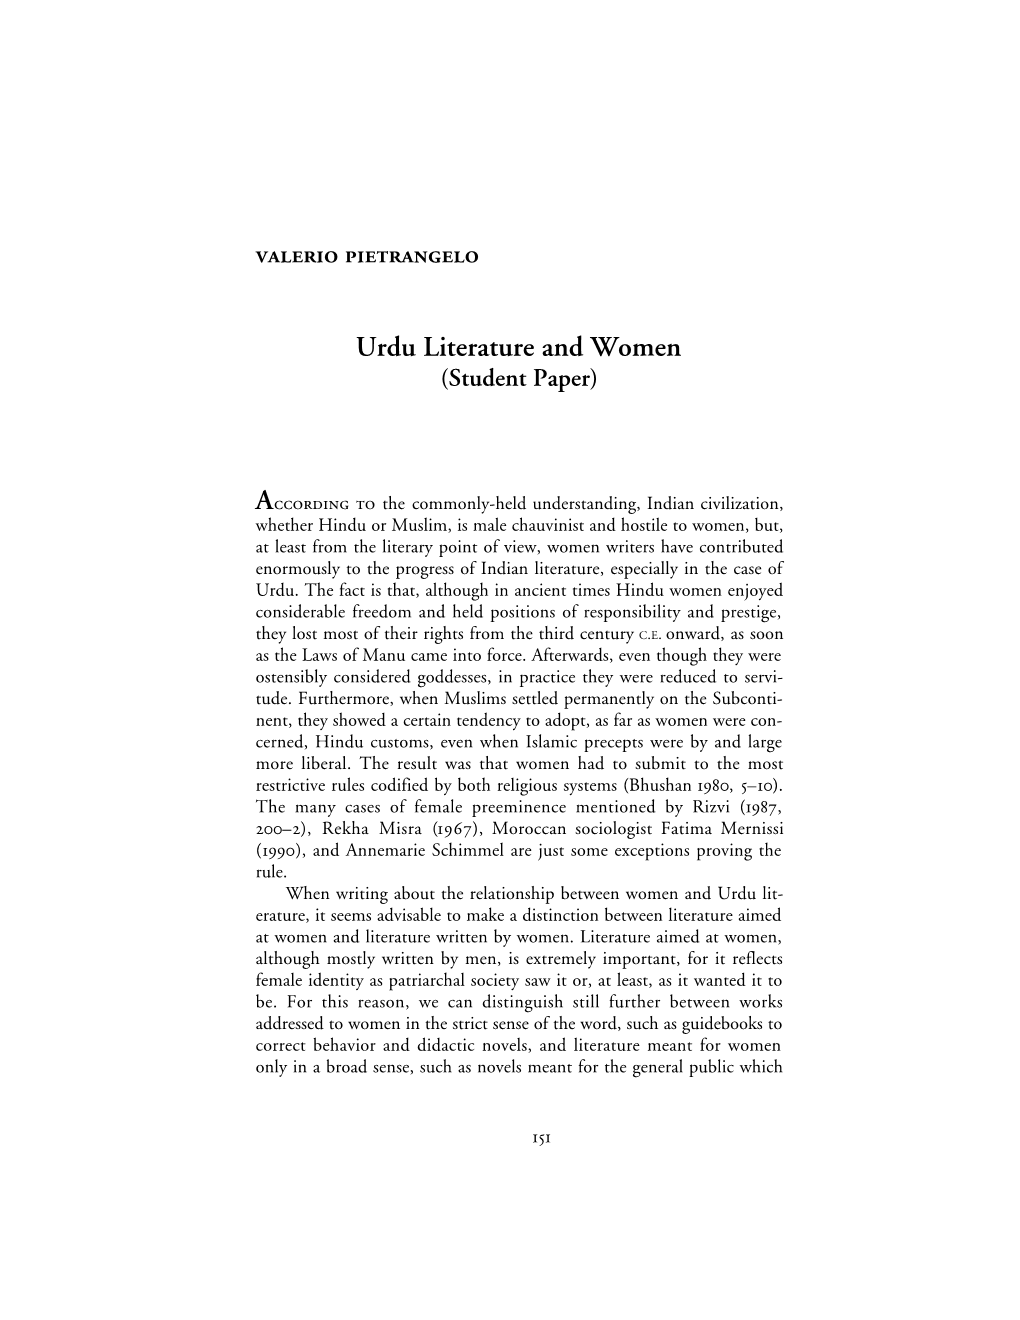 Urdu Literature and Women (Student Paper)